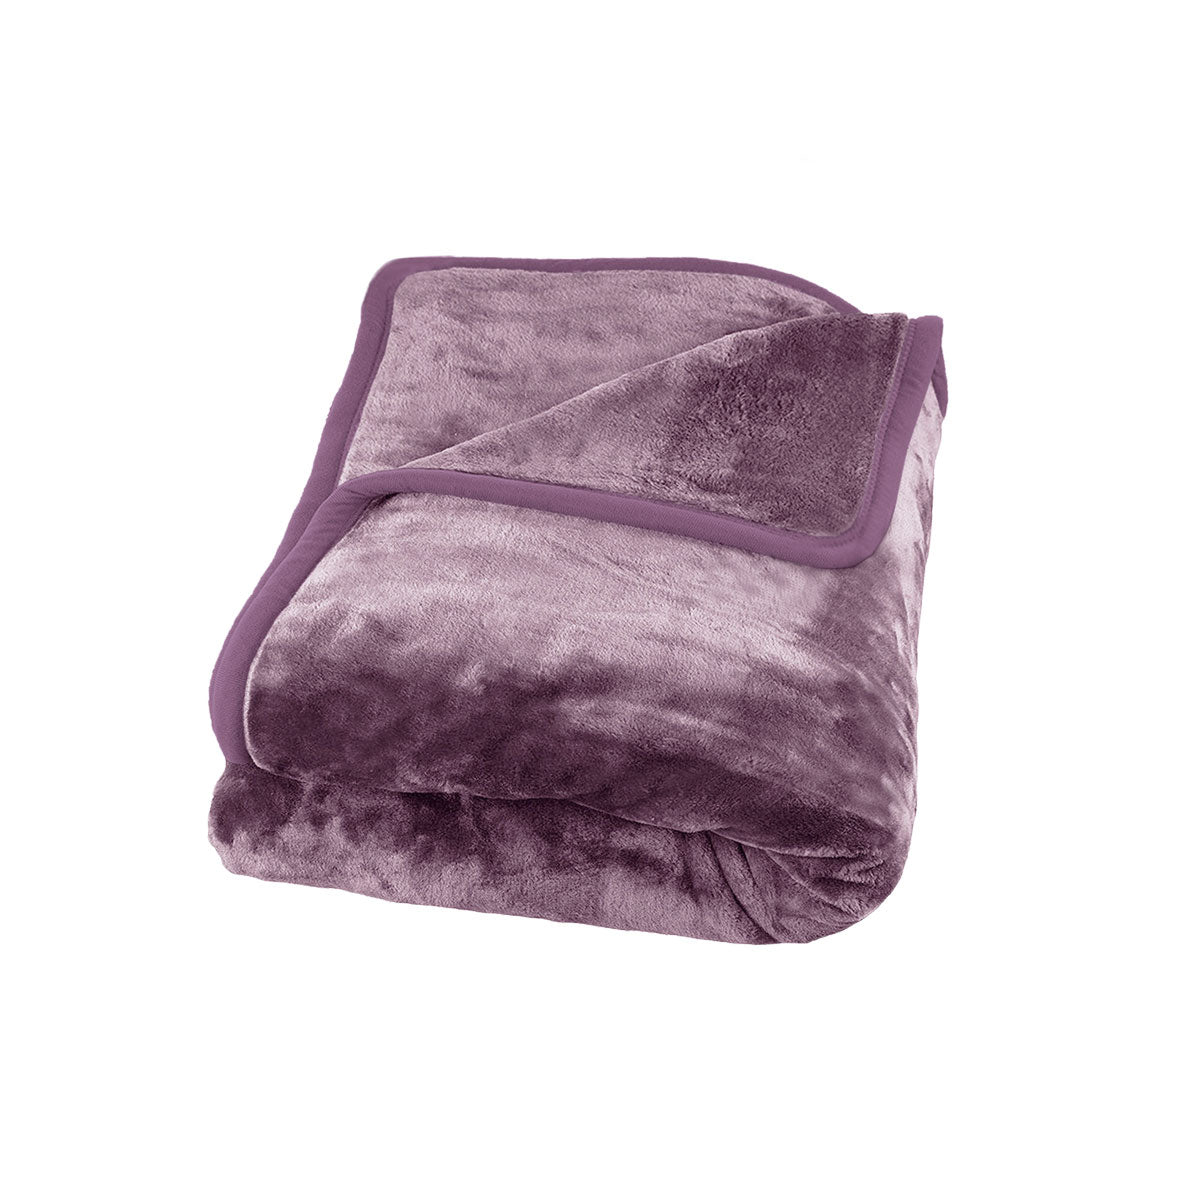 J Elliot Home 800GSM Luxury Winter Thick Mink Blanket Grape Queen